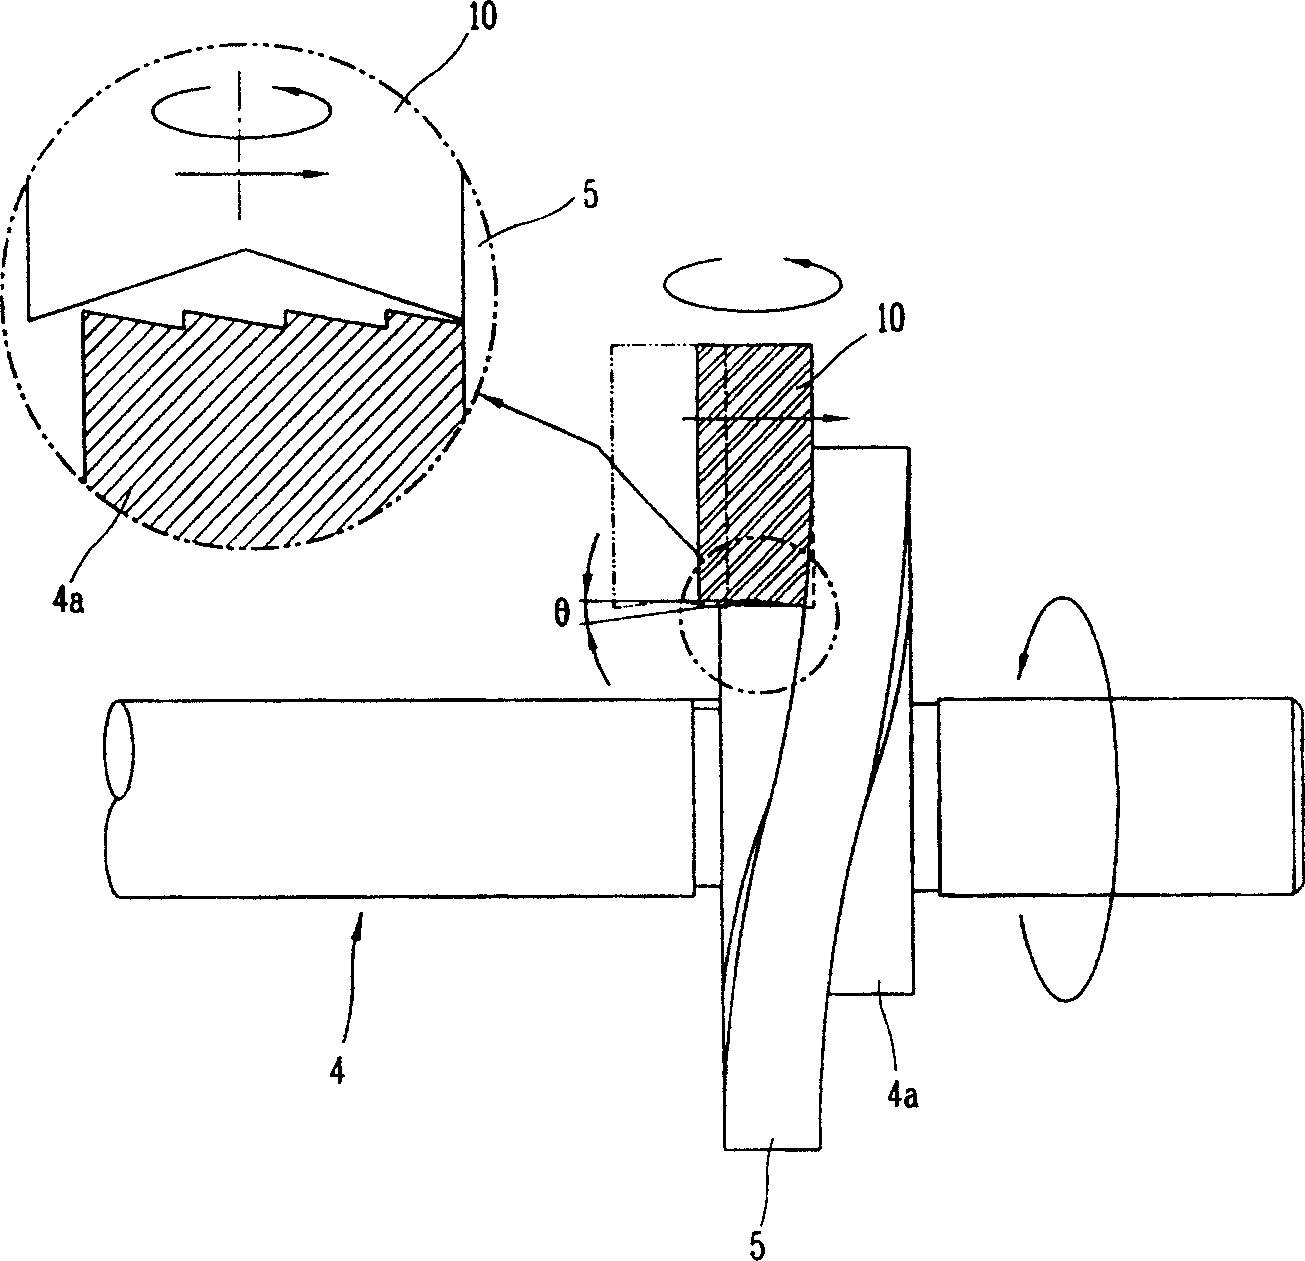 Method for machining blade compressor